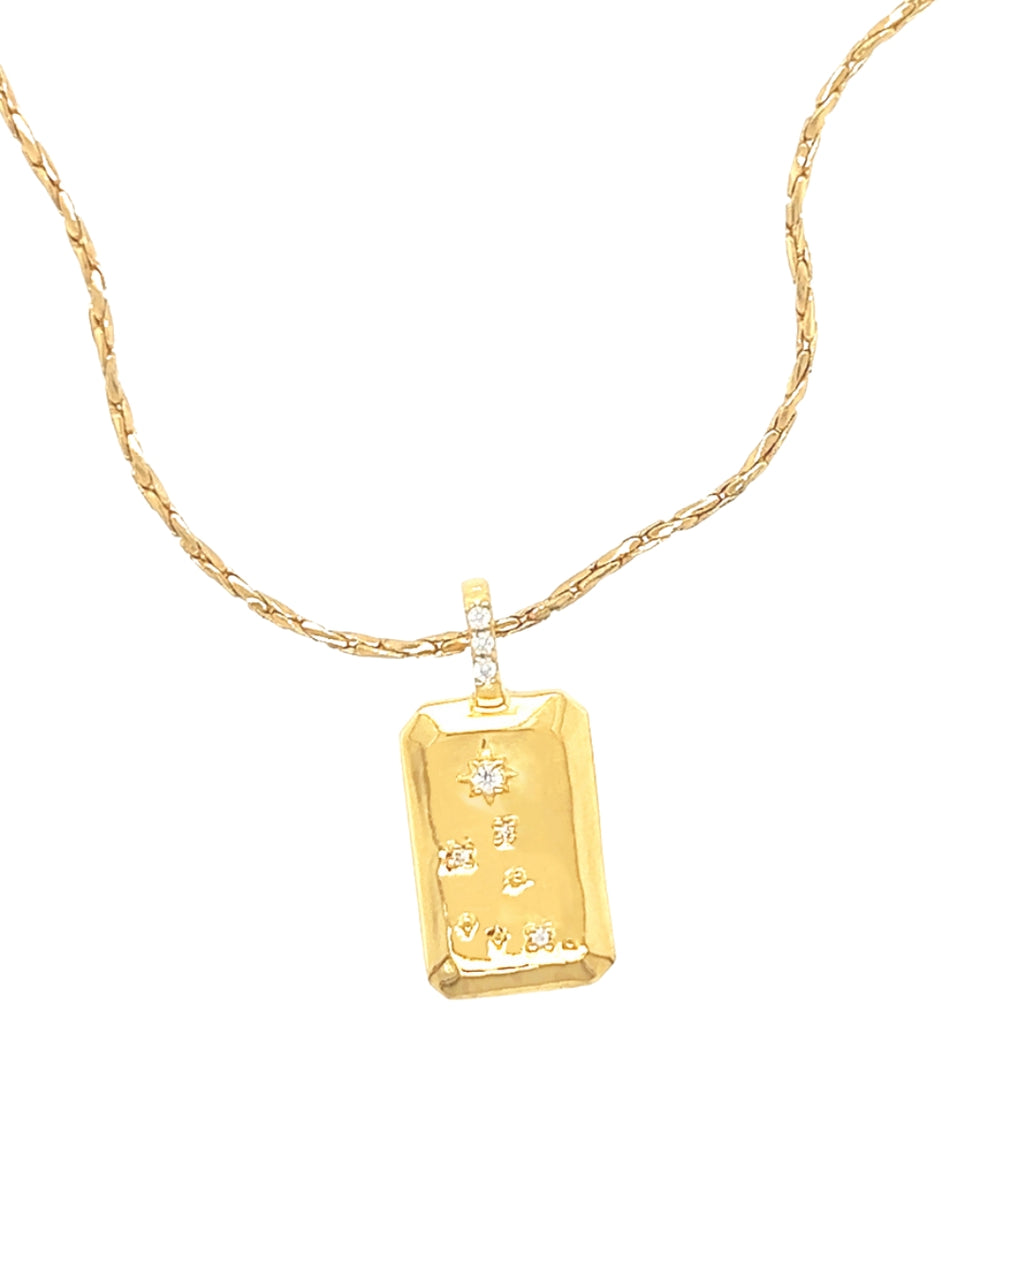 Gold Capricorn Constellation Zodiac Pendant on a Gold Necklace Chain